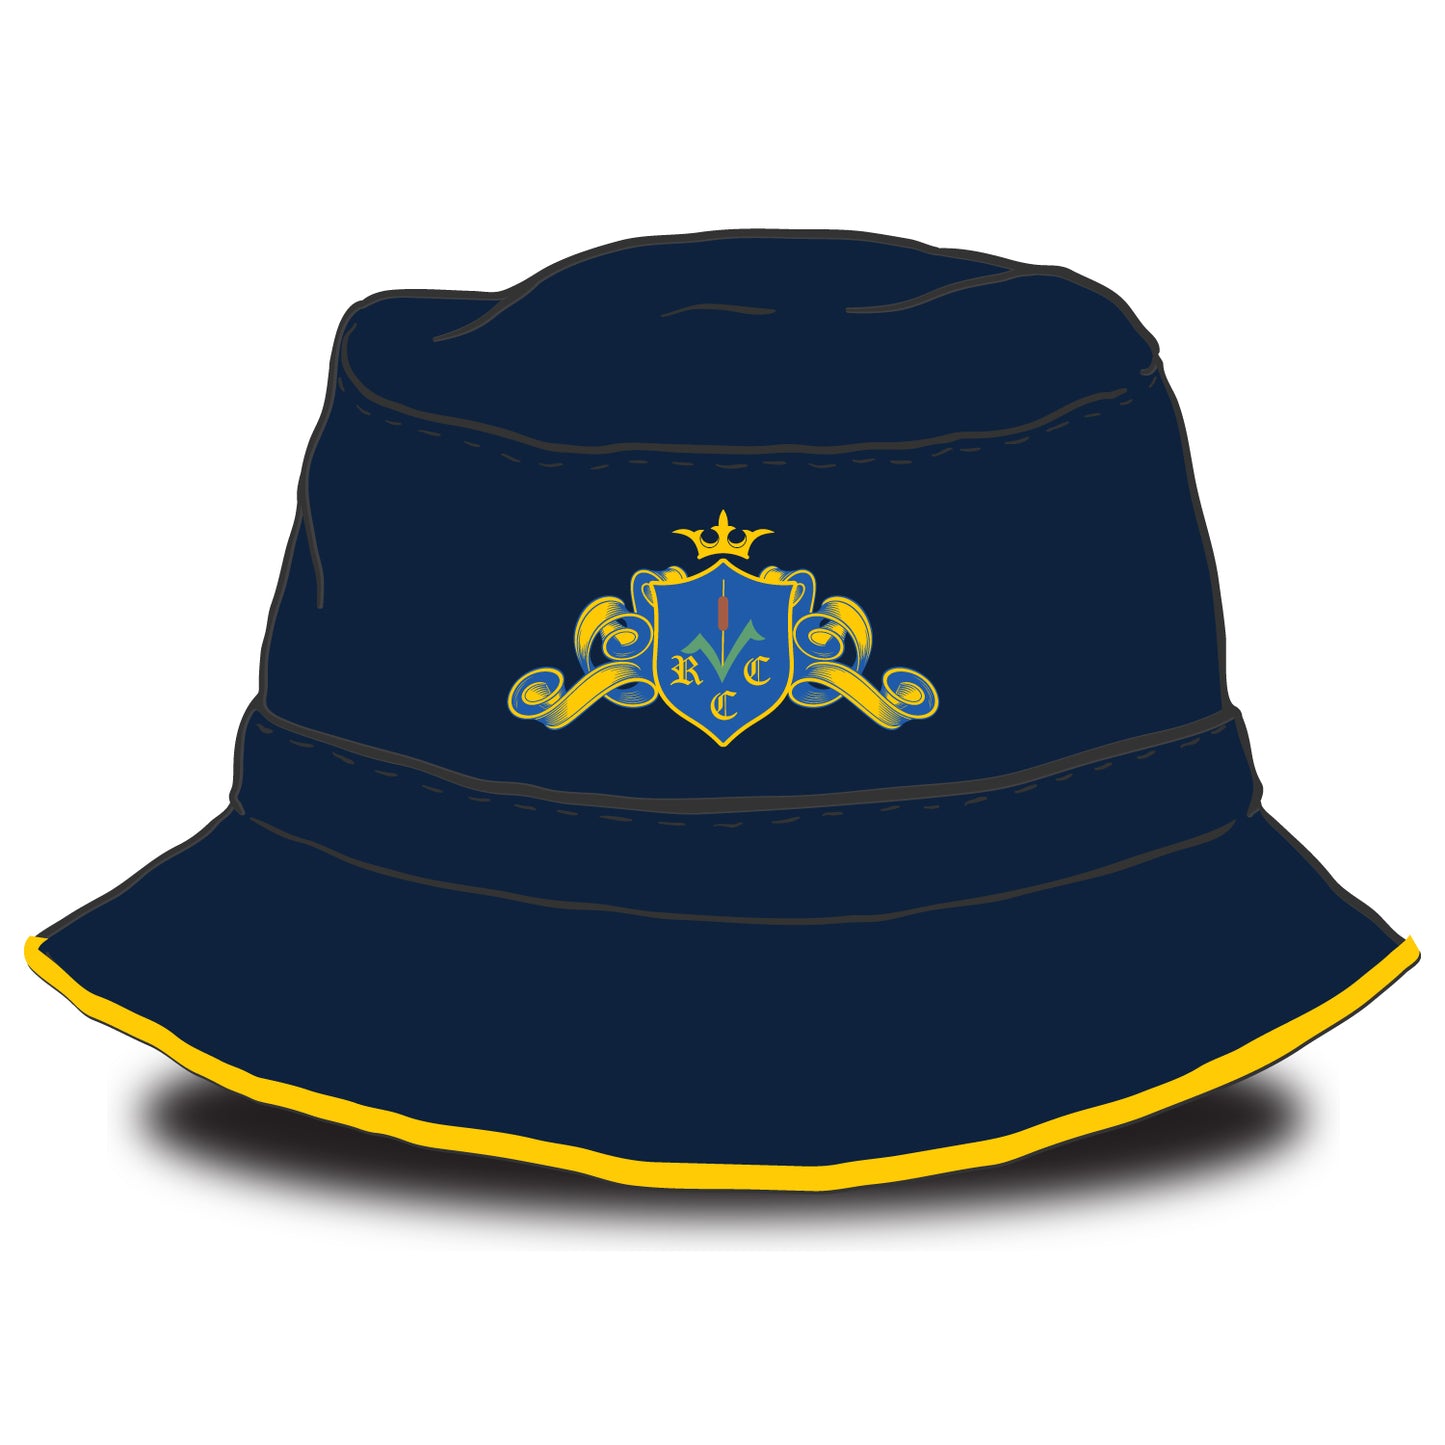 Rushwick Royals Bucket Hat